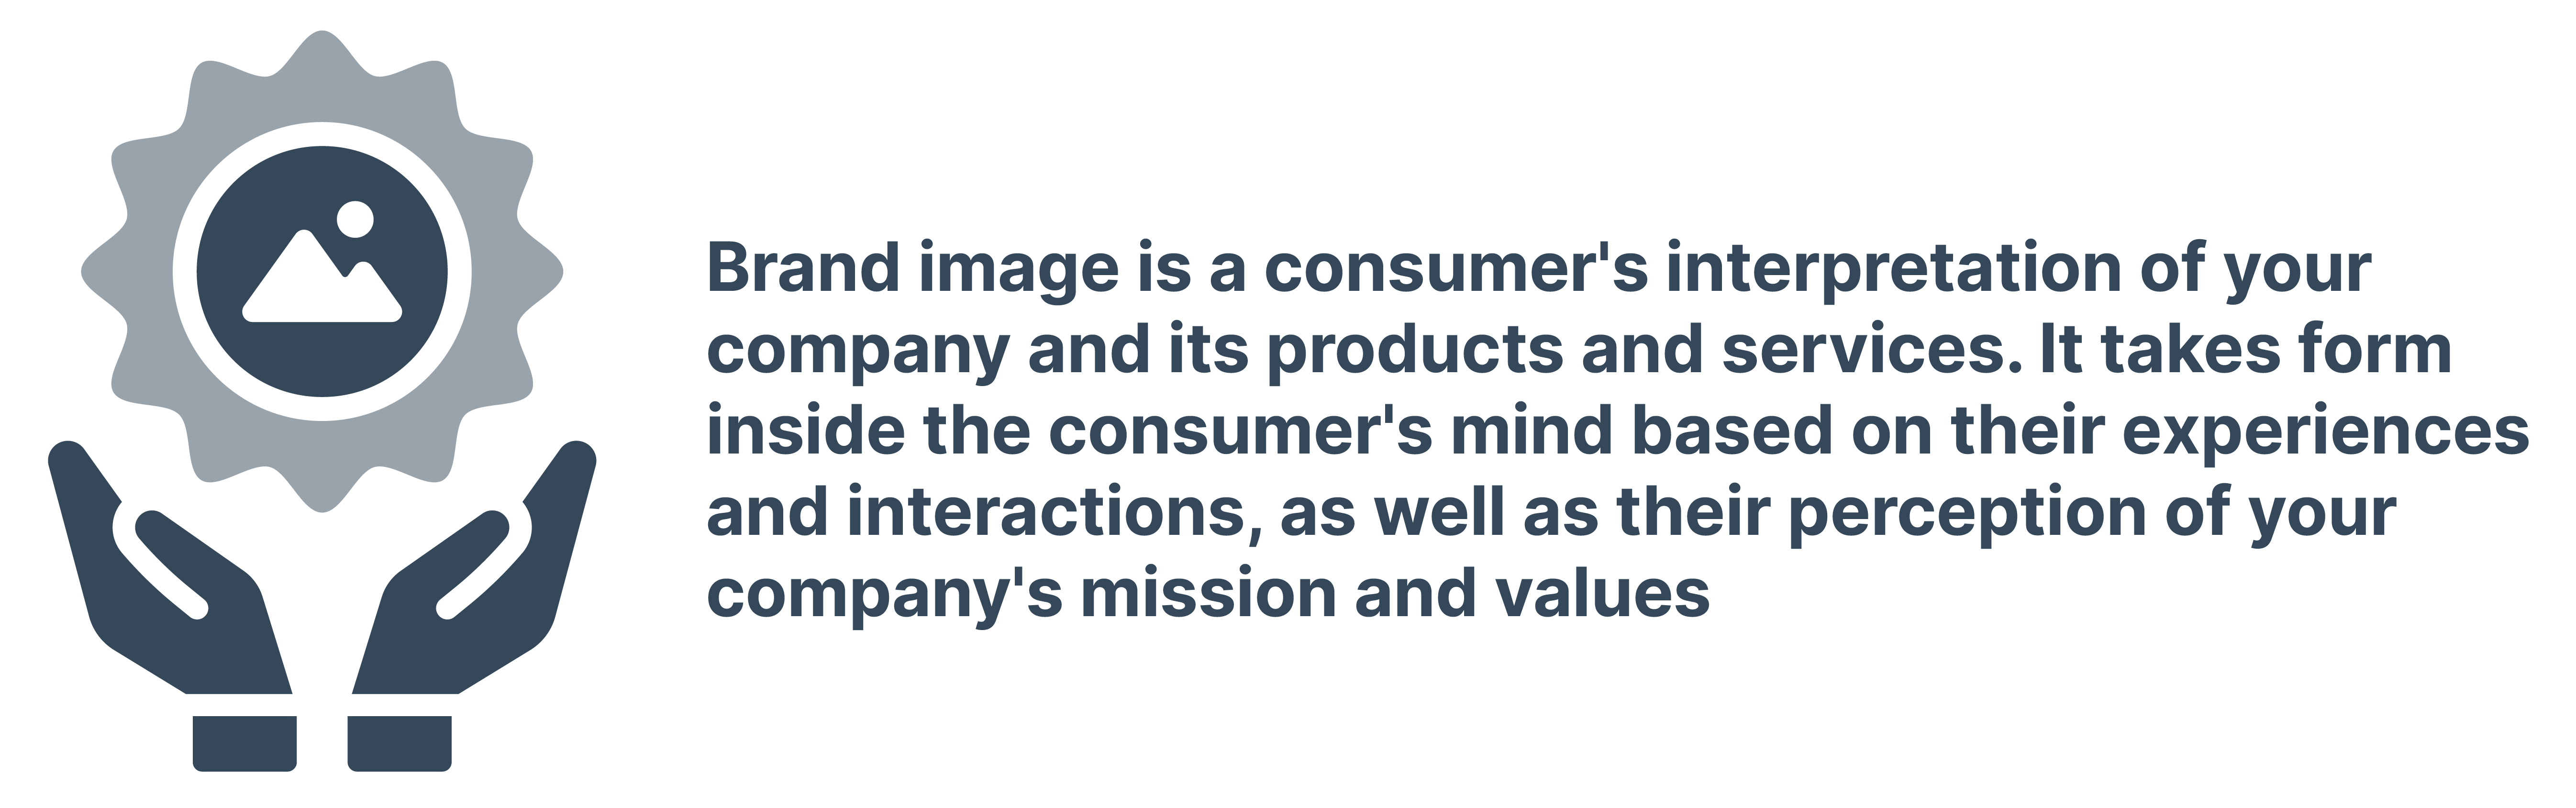 Brand image definition